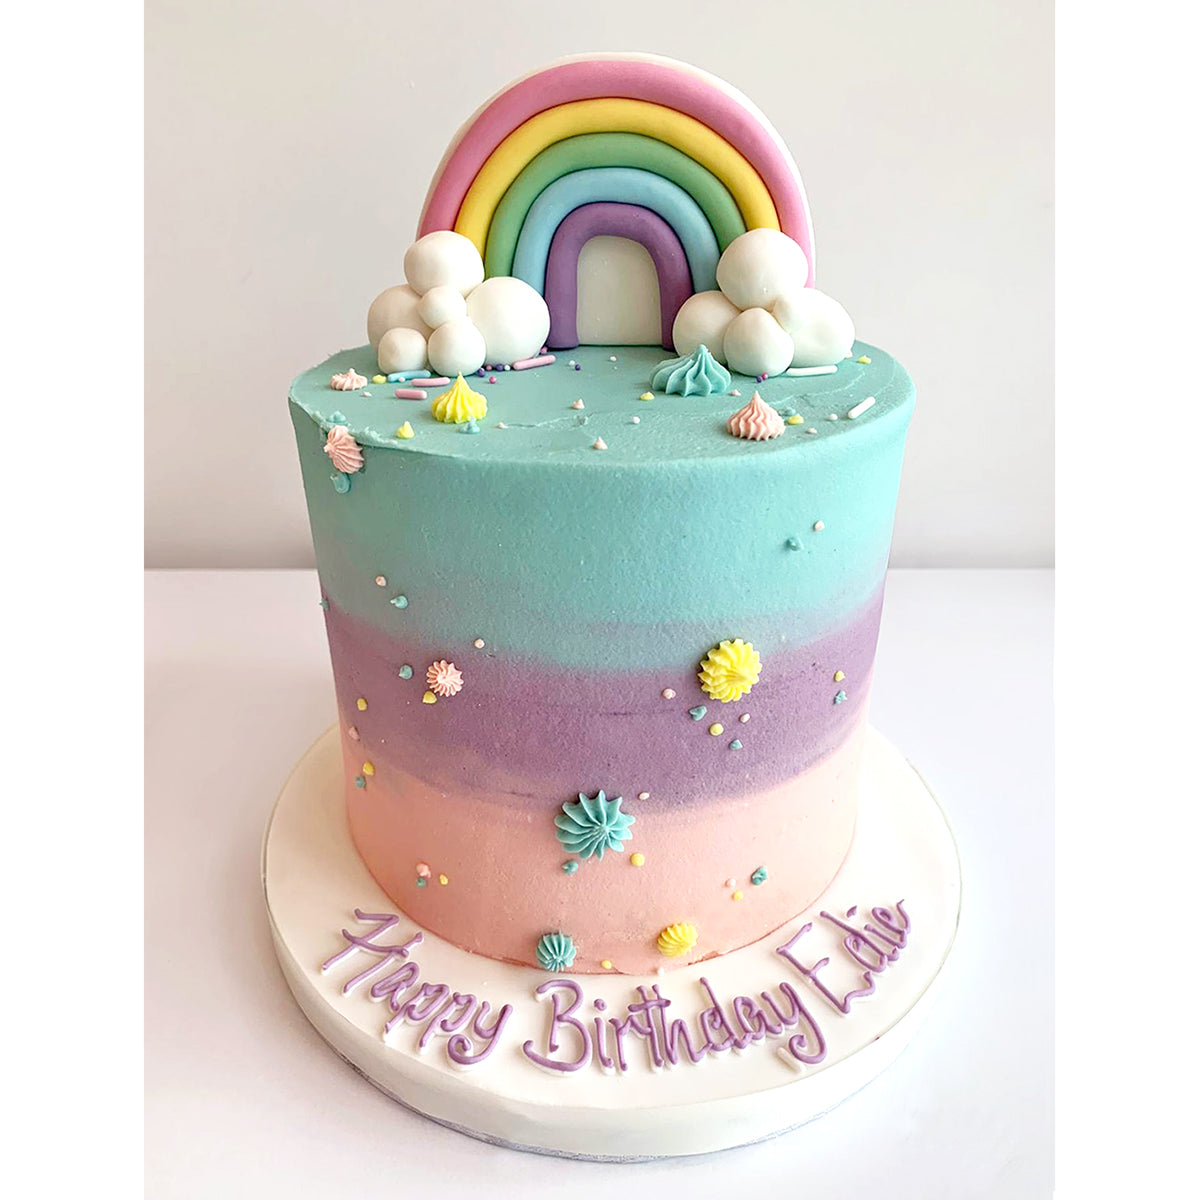 'Wish Upon a Rainbow' Celebration Cake